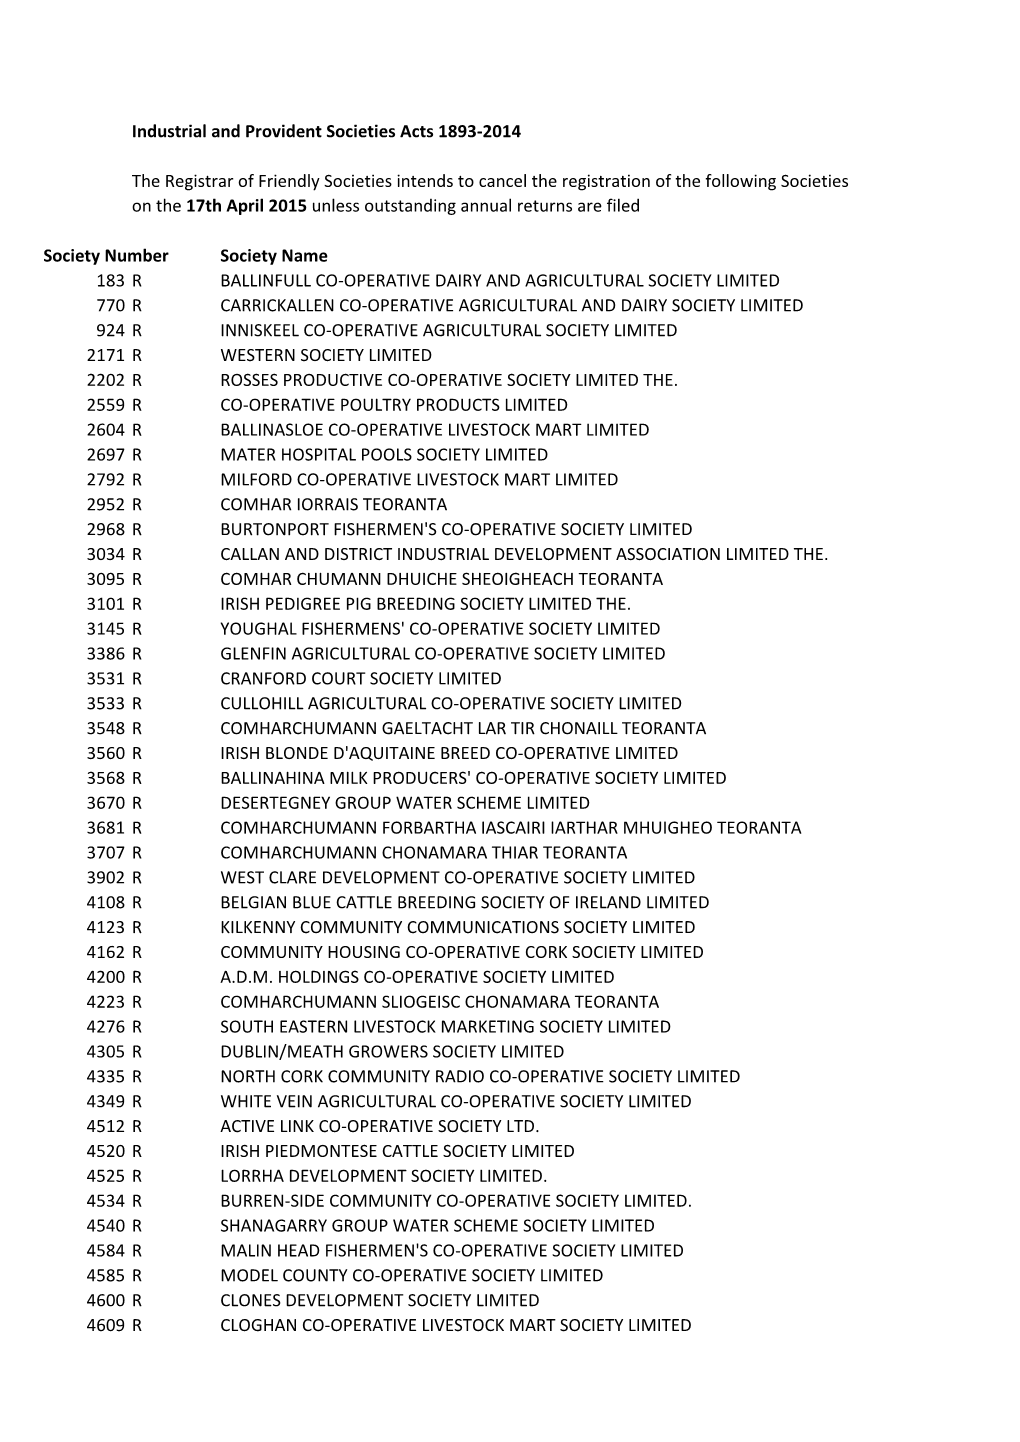 Cancellation List Jan 26Th 2015